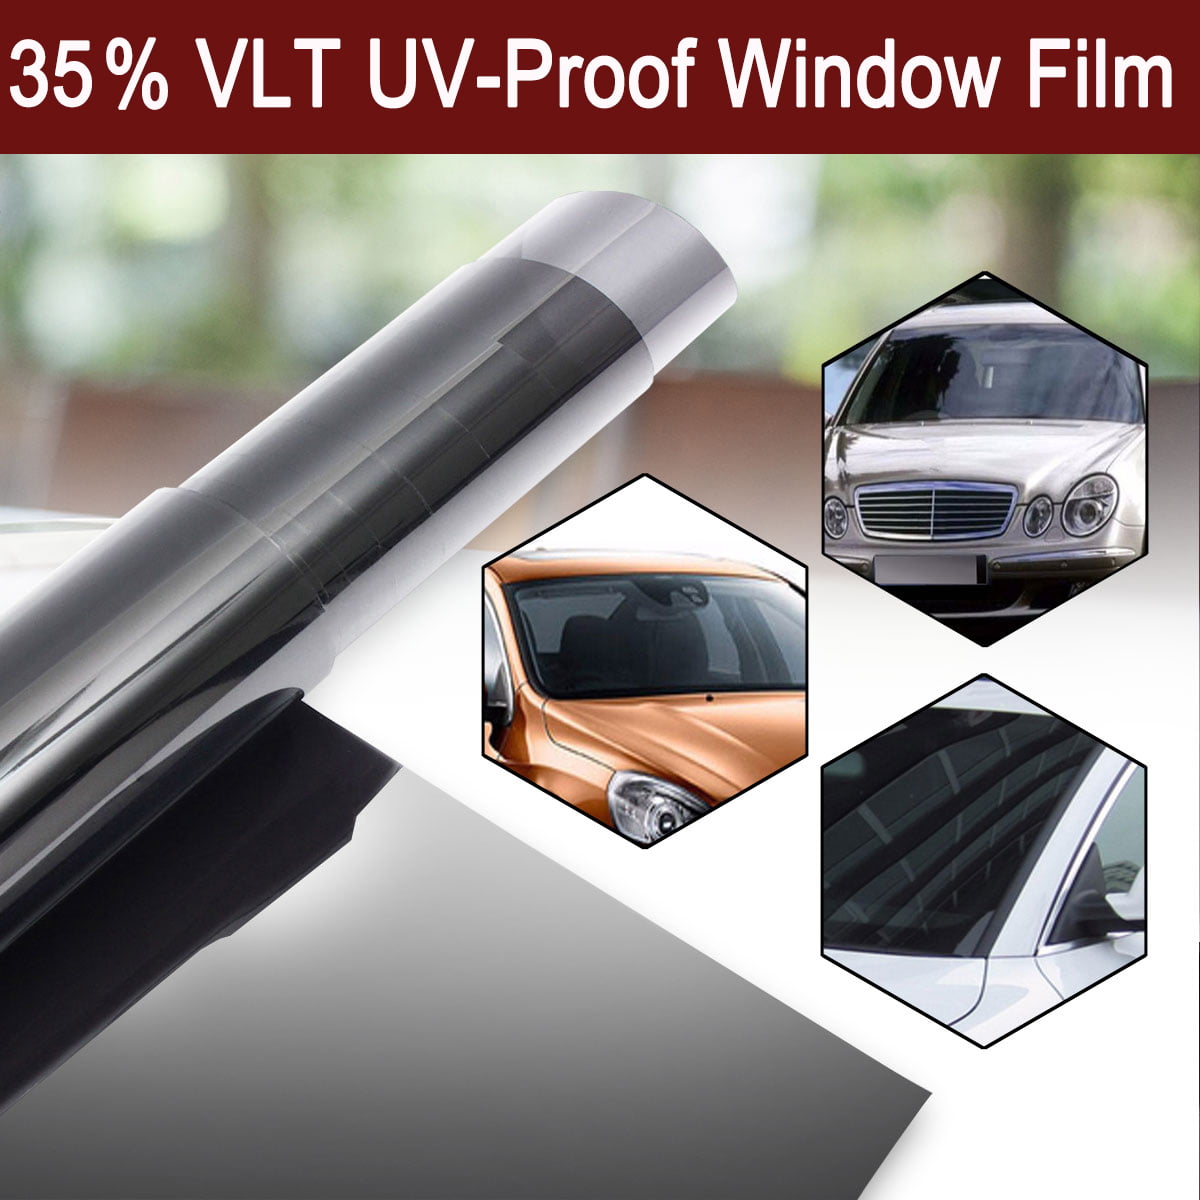 Uncut Roll Window Tint Film 50% VLT 24" In x 25' Ft Feet Car Home Office Glass 